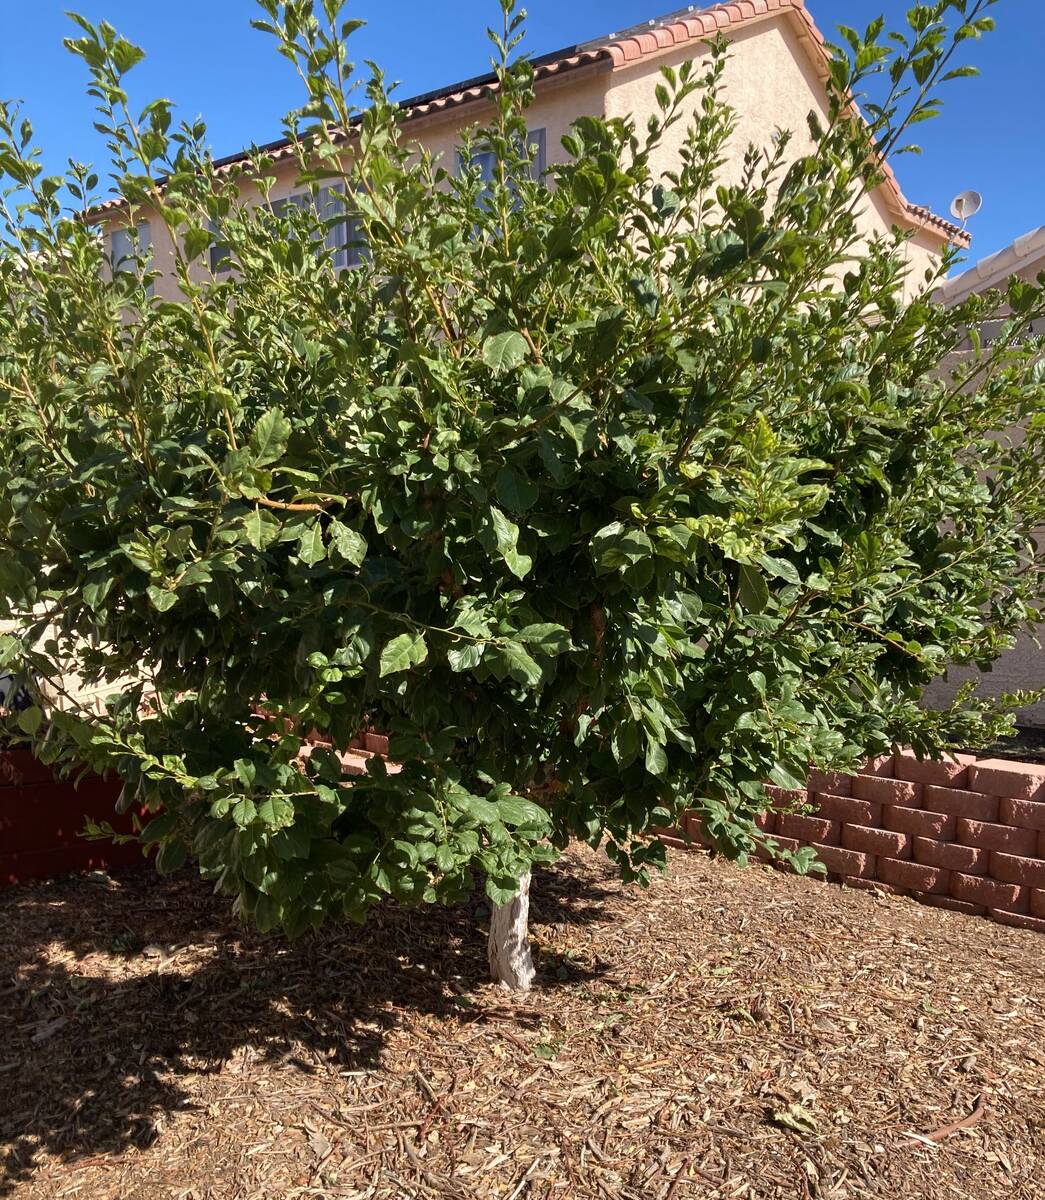 A 6-year-old Flavor Supreme pluot tree grows in Las Vegas. (Bob Morris)